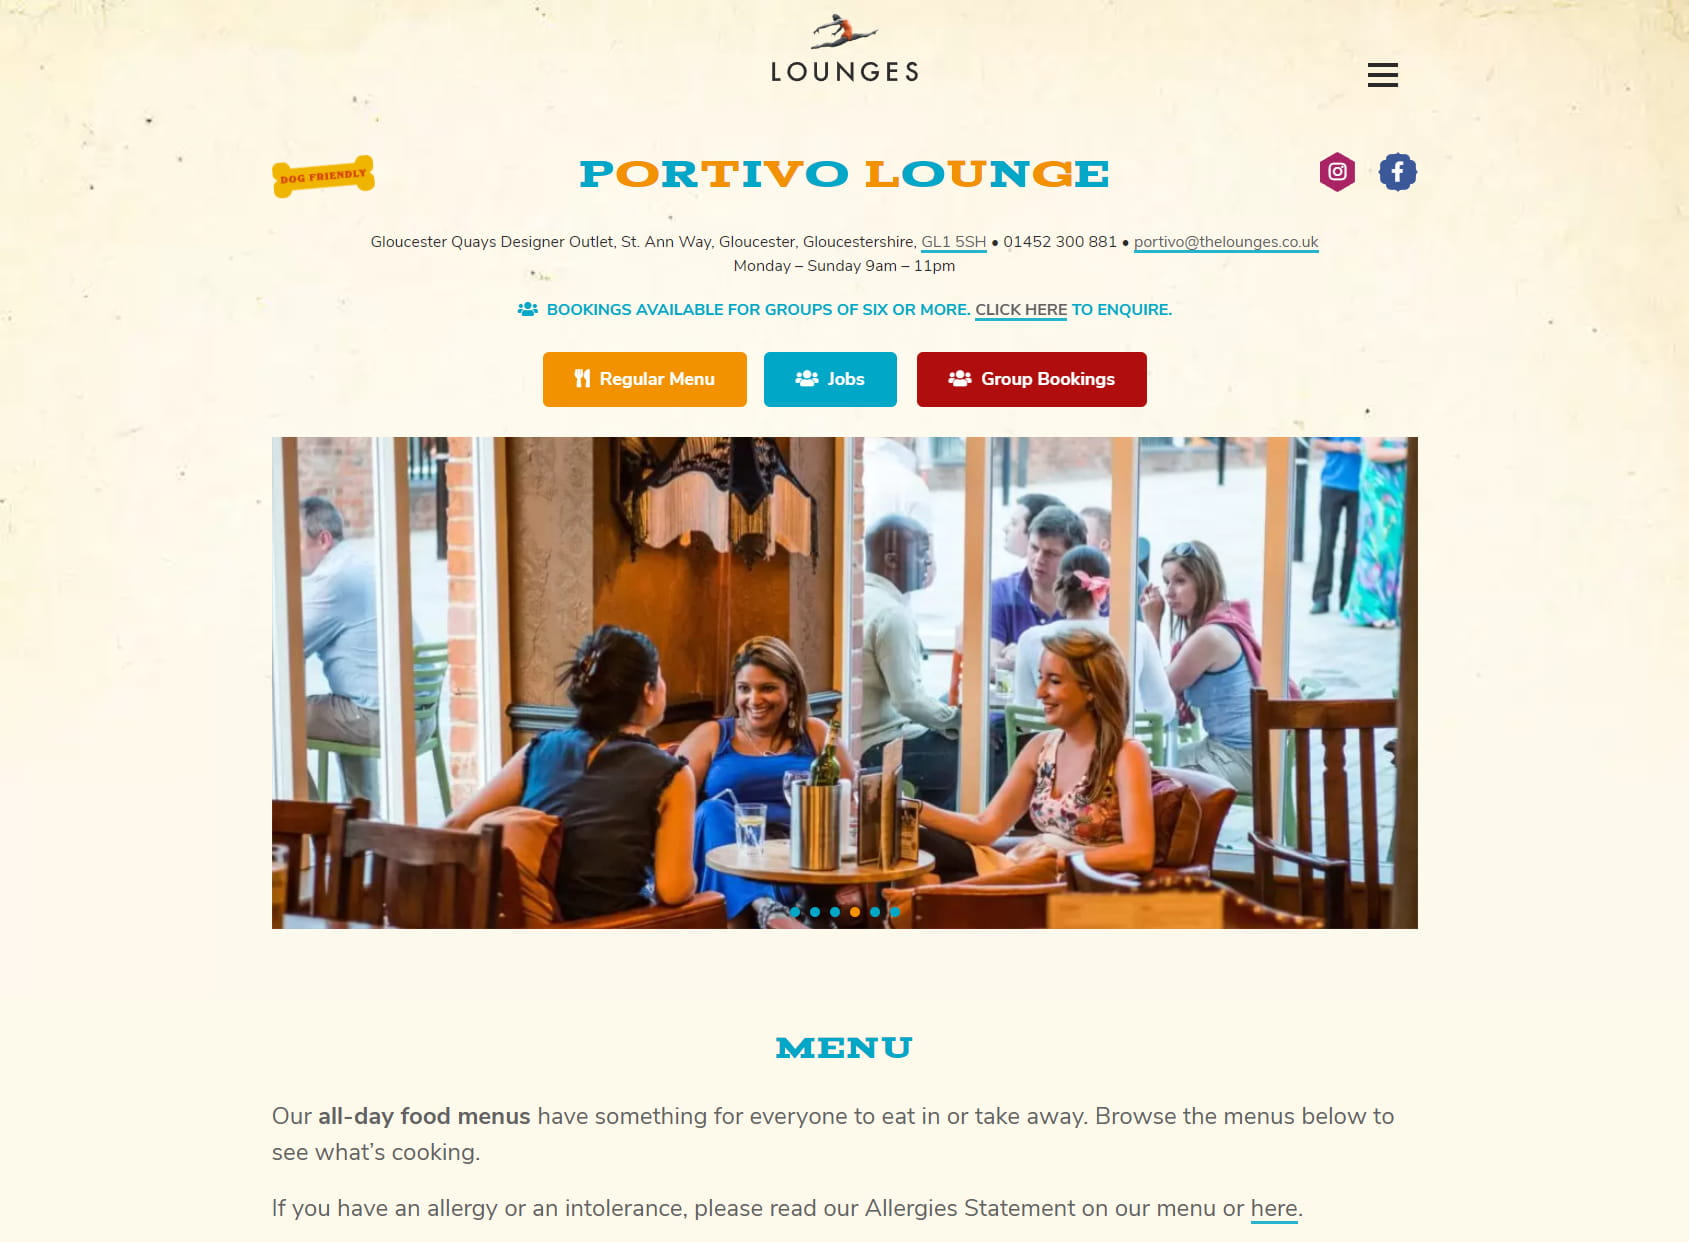 Portivo Lounge